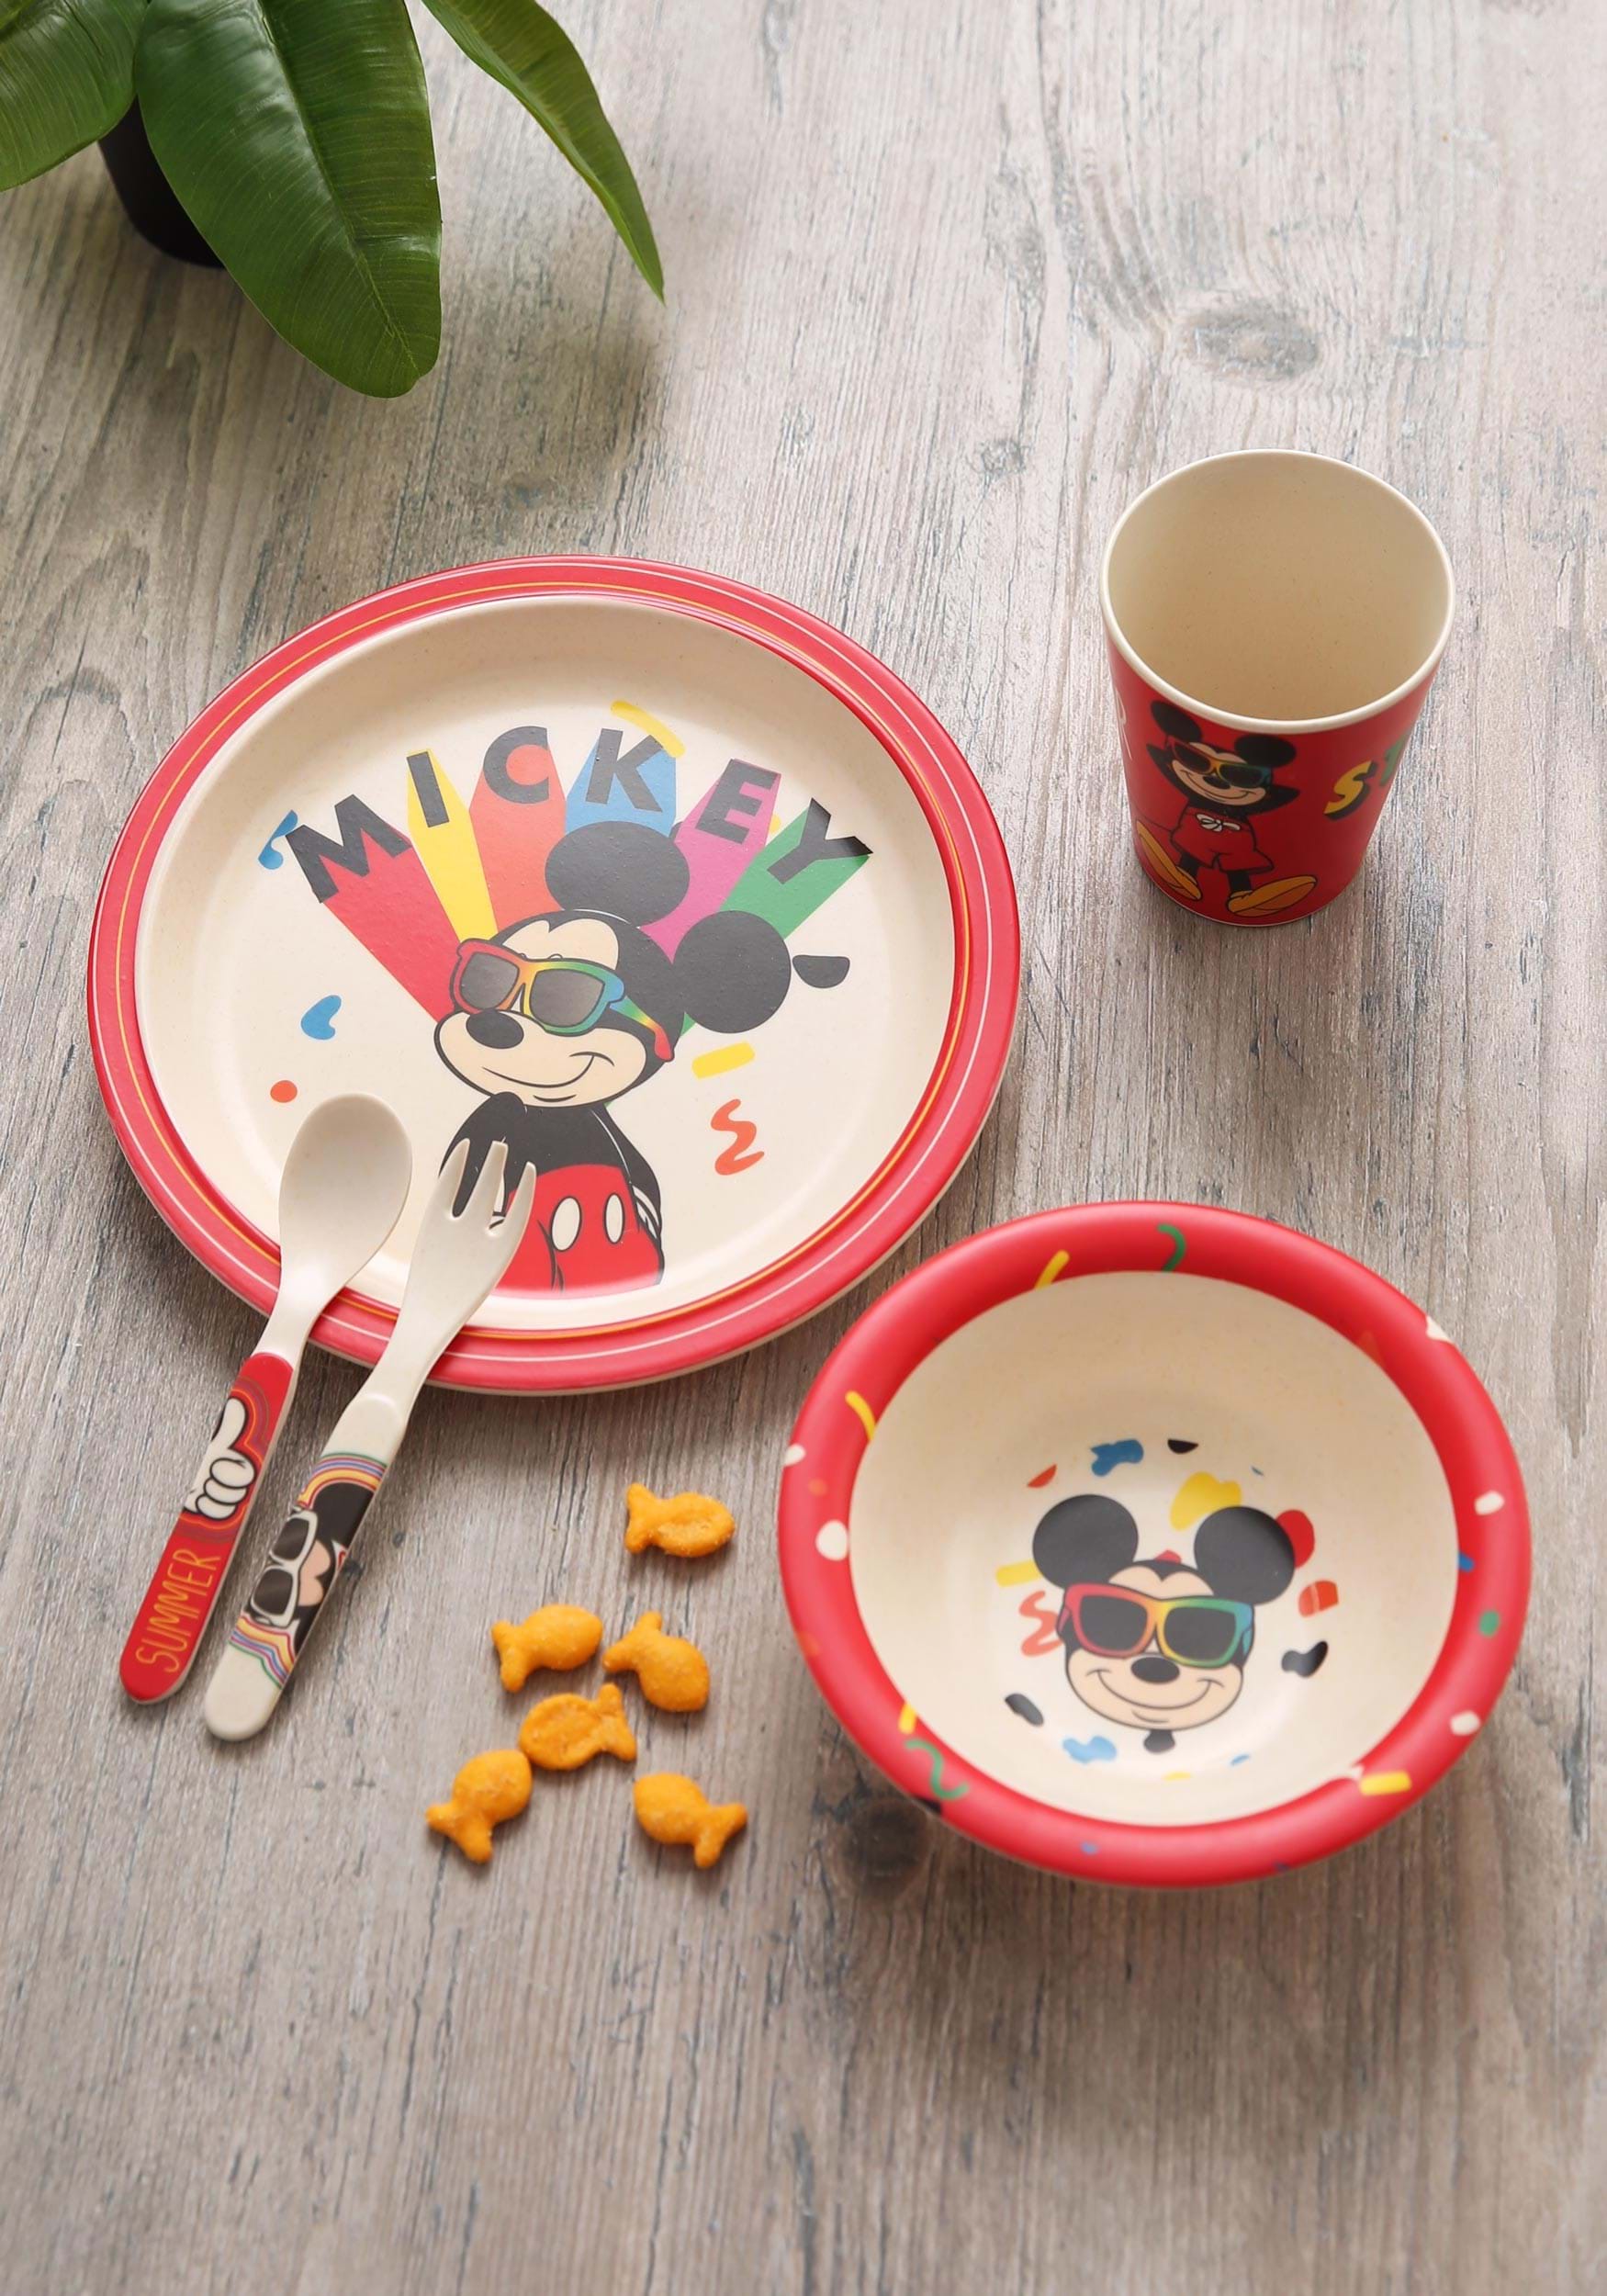 Disney Mickey Mouse Dinnerware 3pc Setting Dinner Plate, Bowl